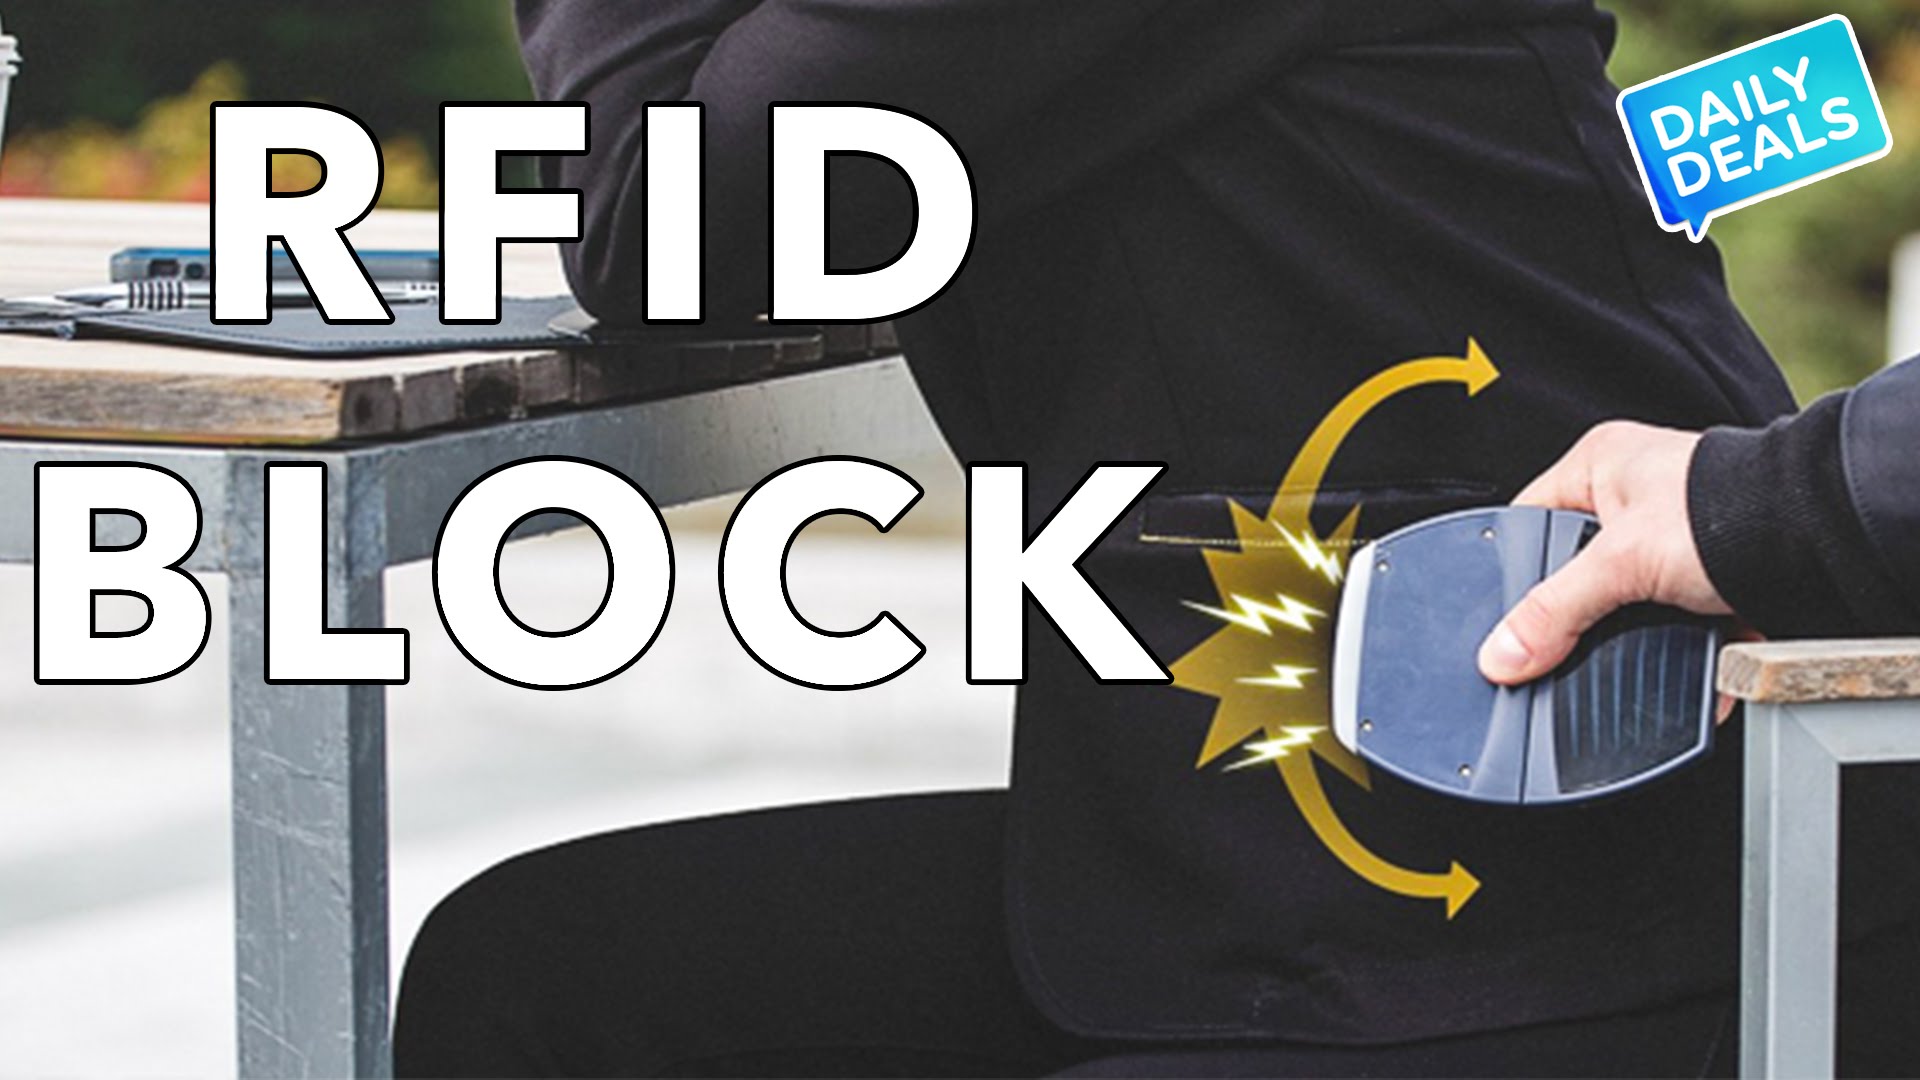 RFID blocking.jpg